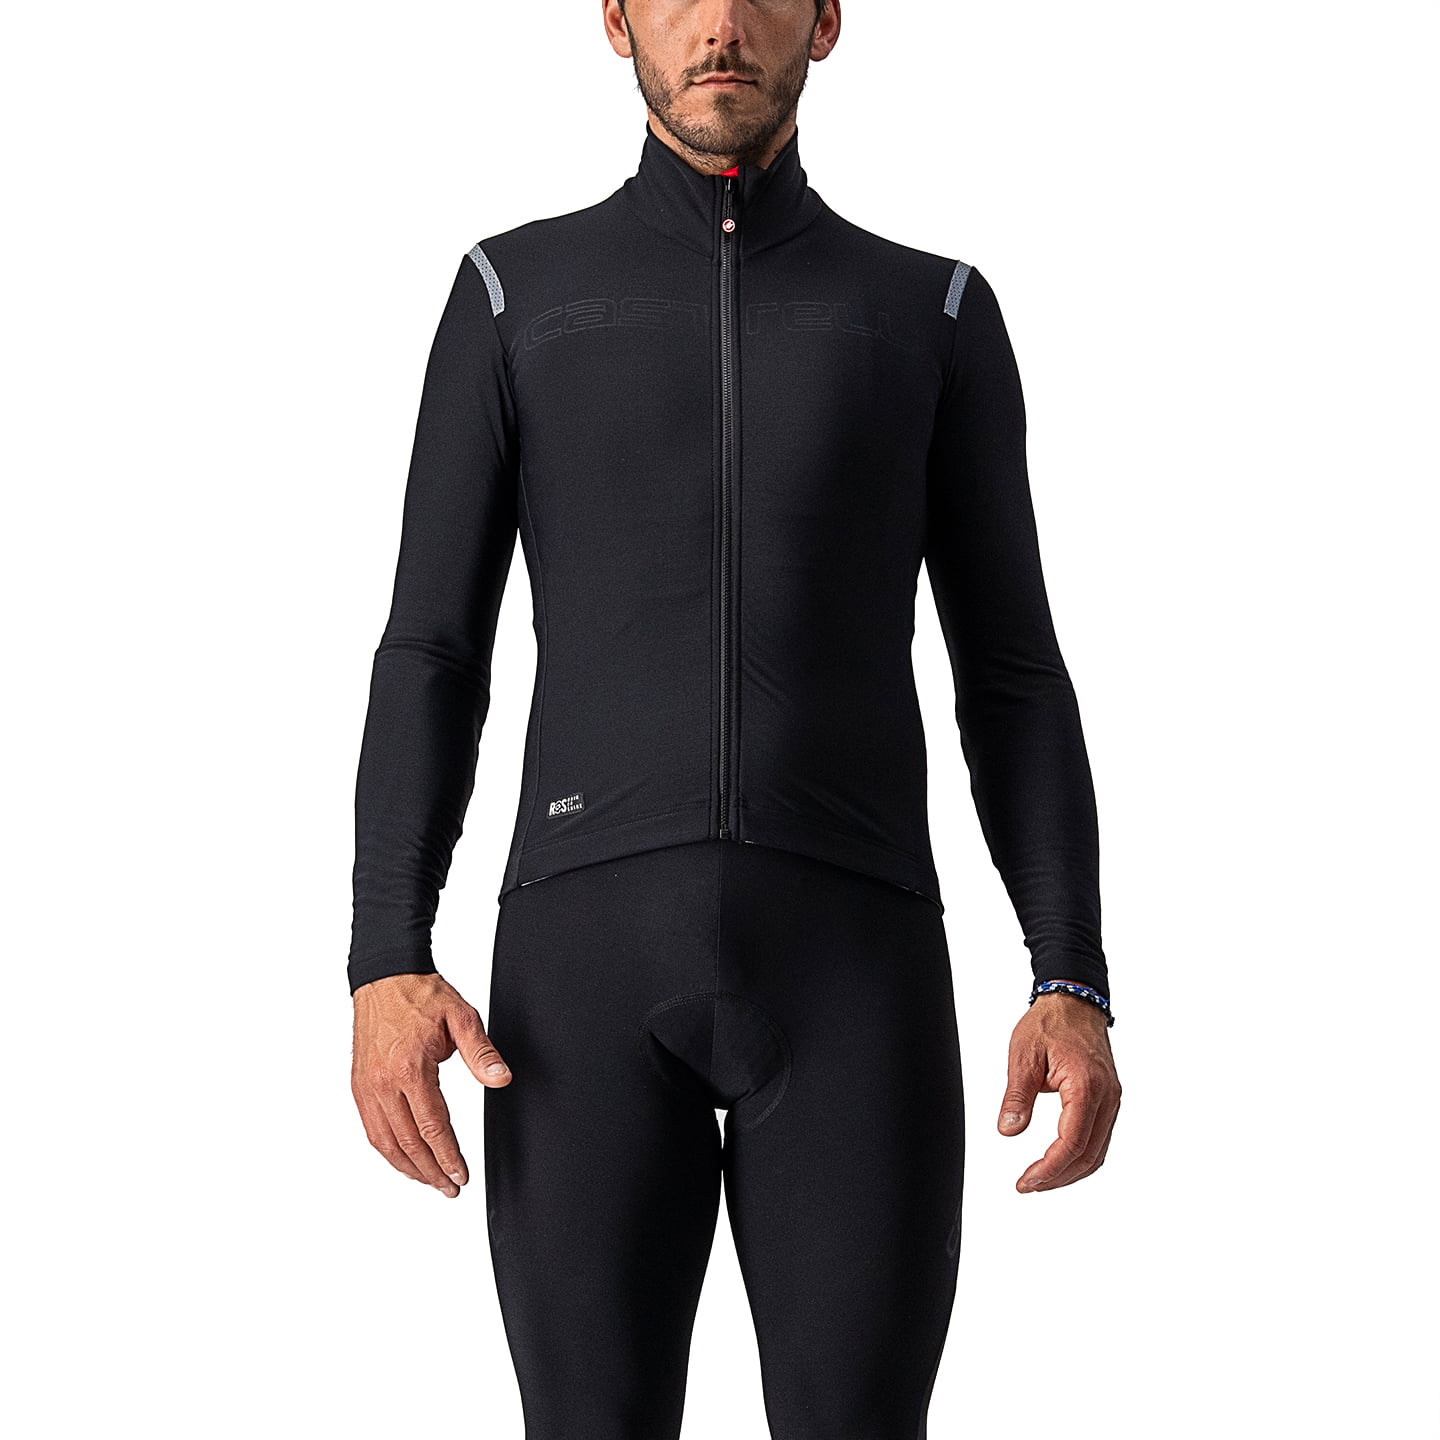 CASTELLI Tutto Nano RoS Light Jacket Jersey / Jacket, for men, size 3XL, MTB jacket, Cycling gear